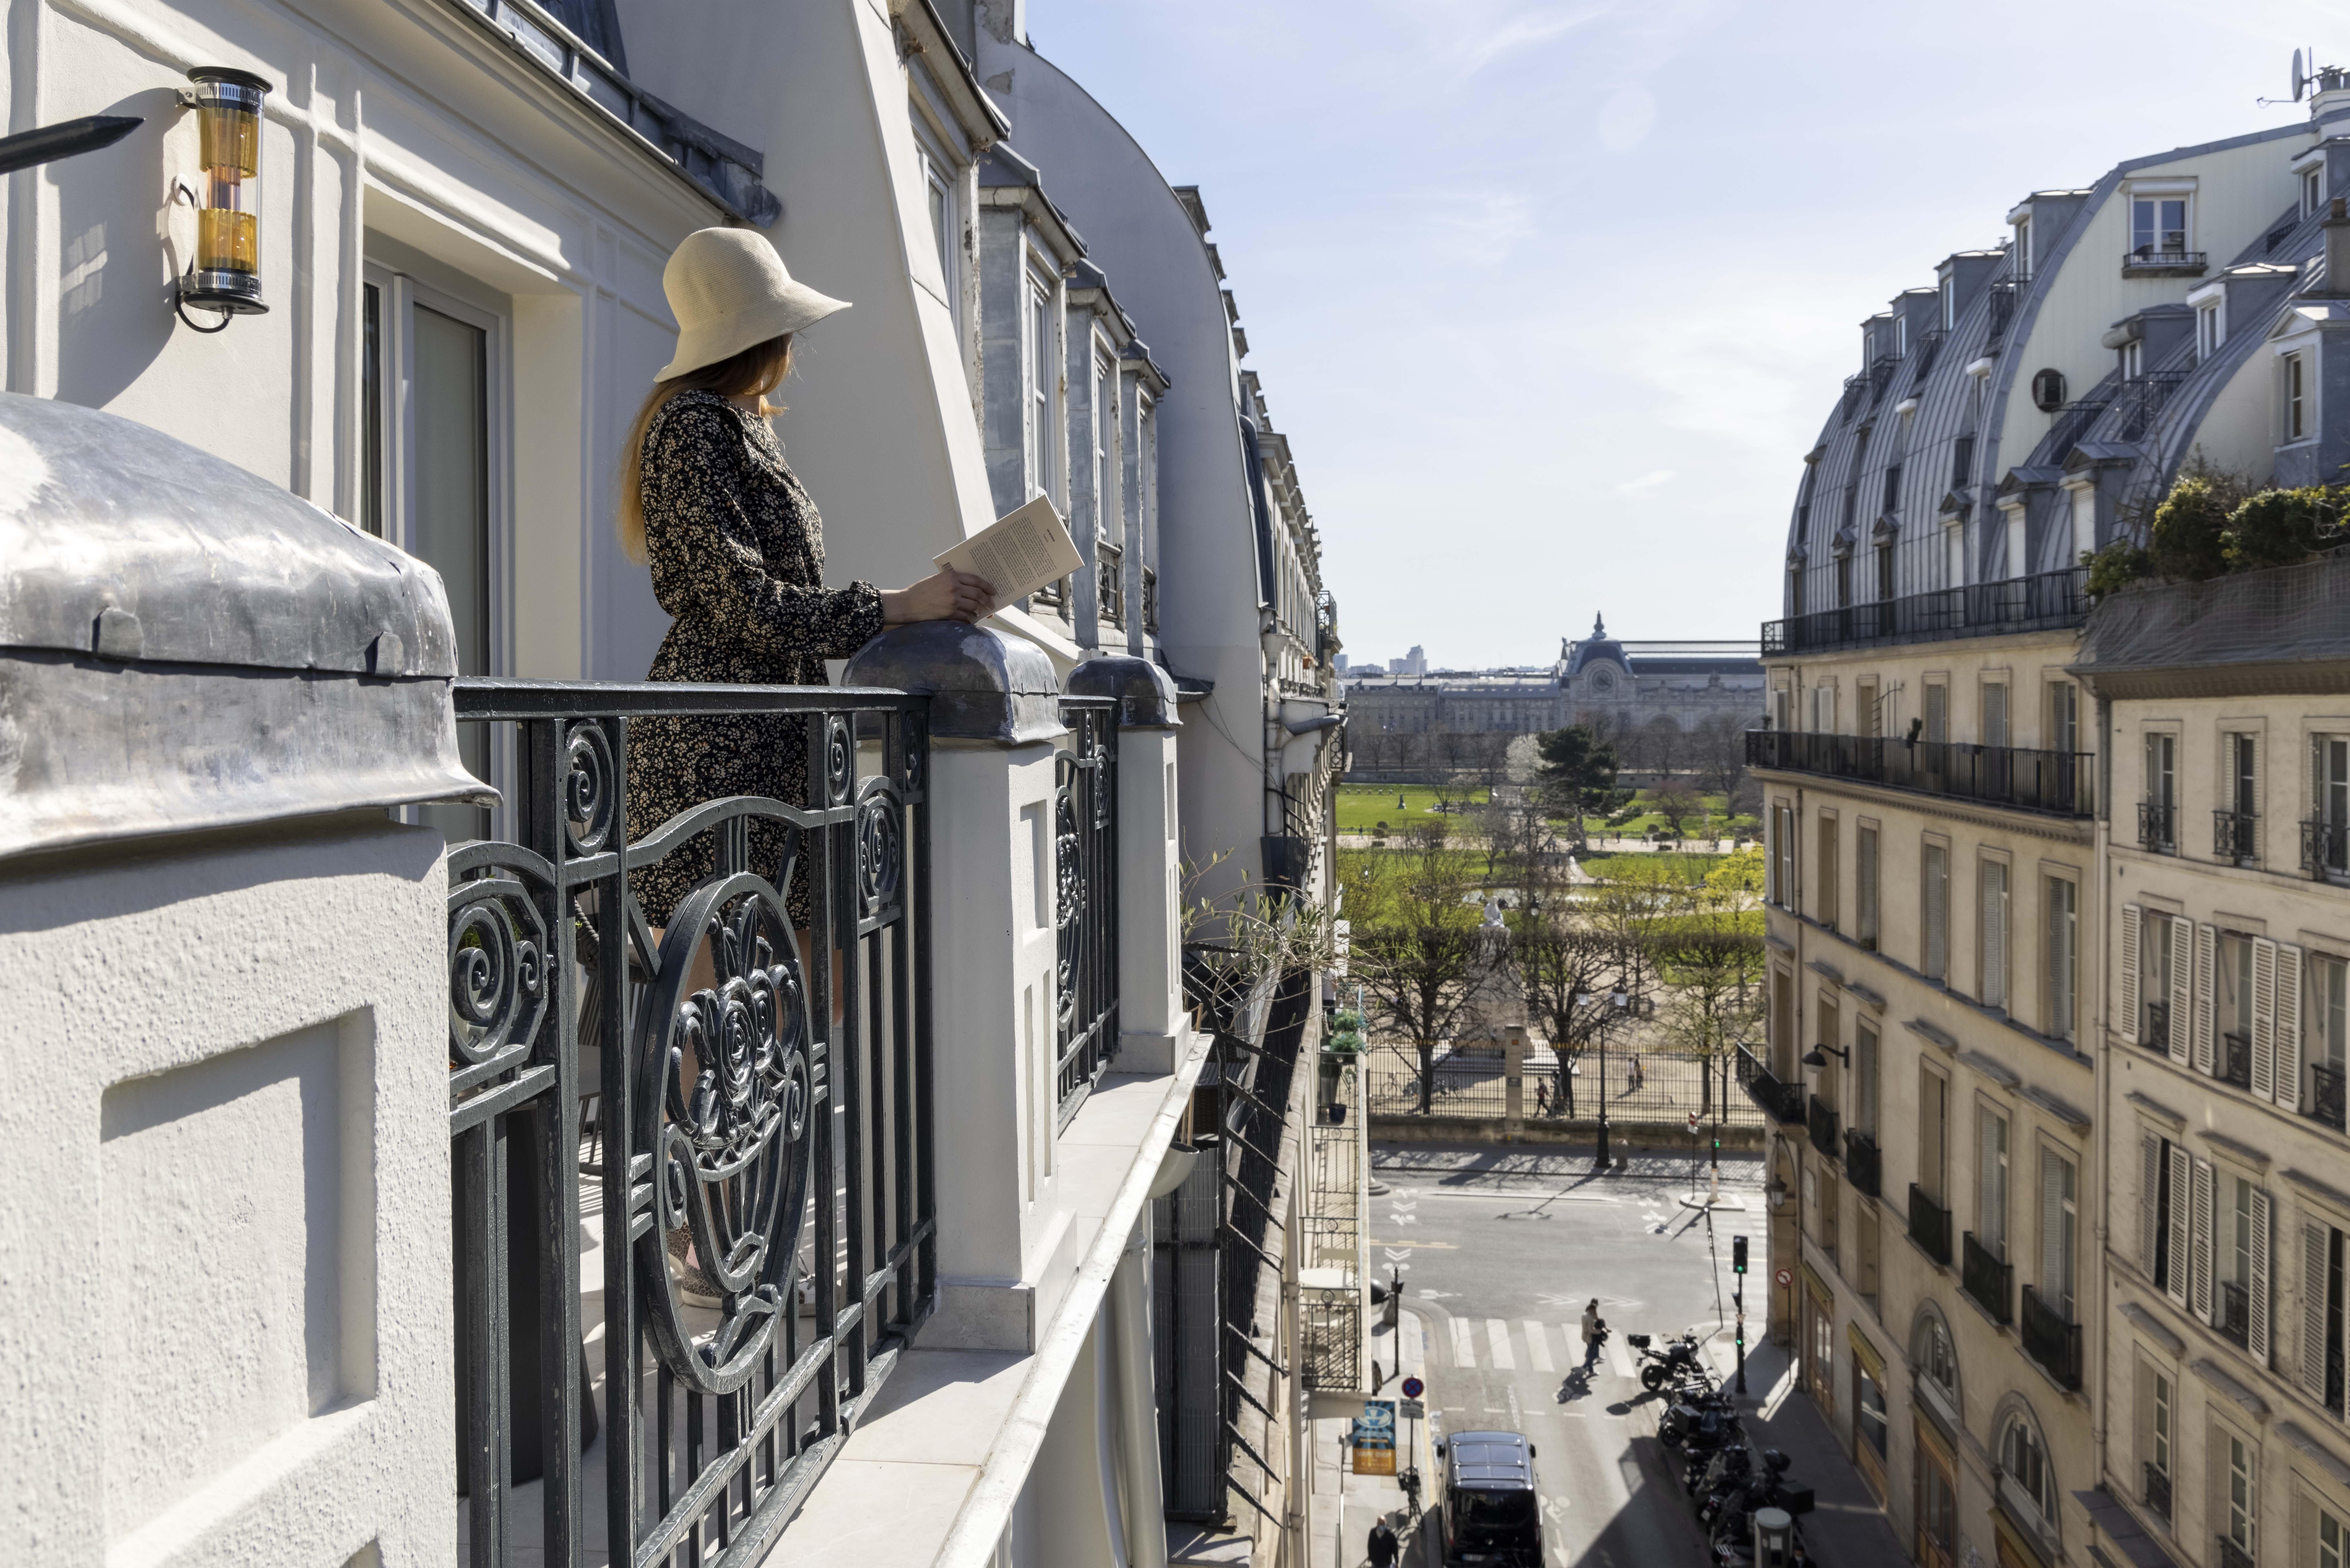 Hotel Louvre Montana Париж Экстерьер фото